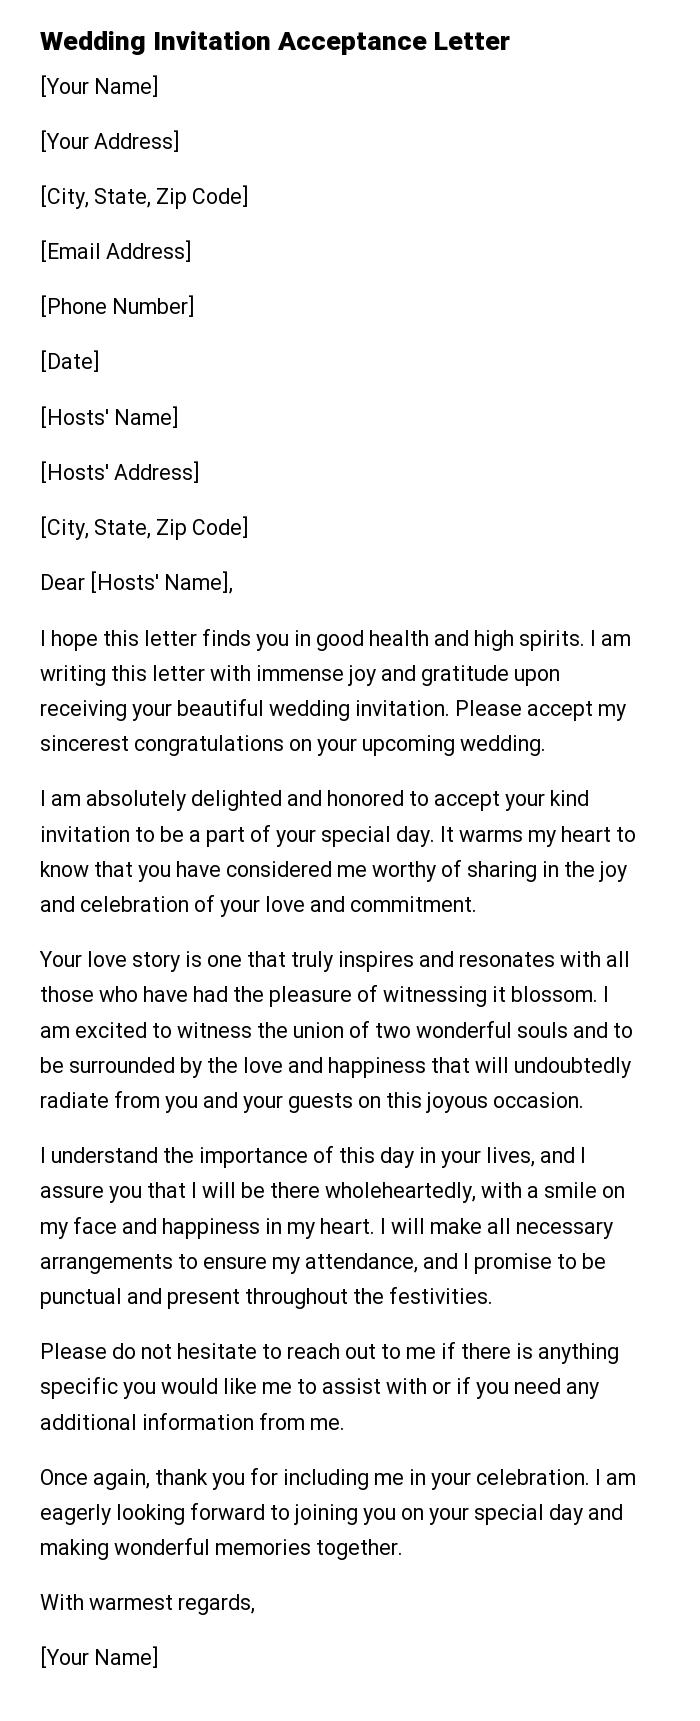 Wedding Invitation Acceptance Letter